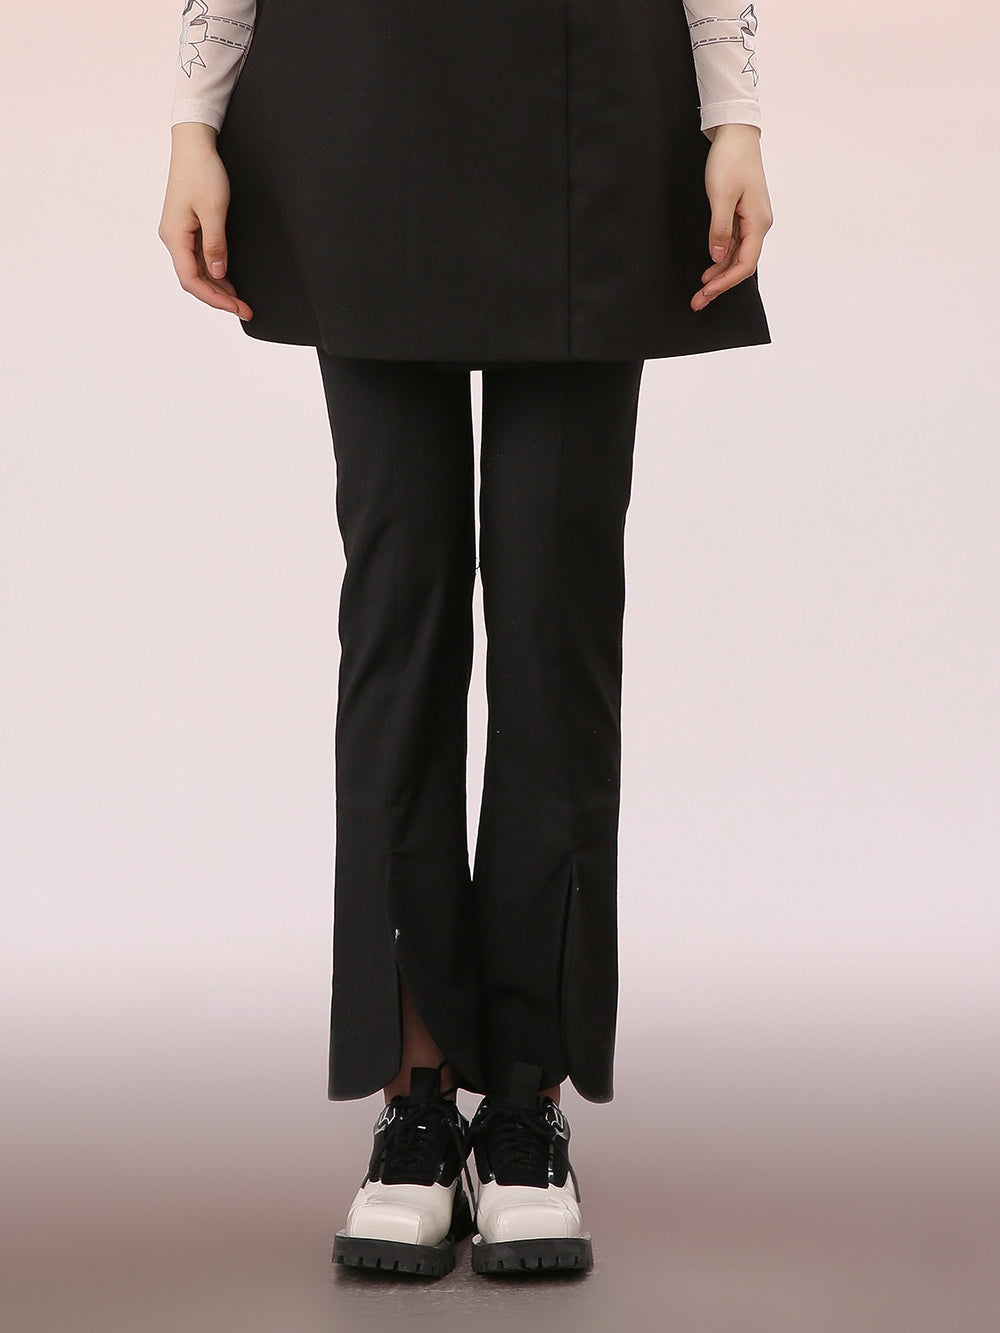 MUKZIN Slim Look-thin Black All-match Simple Casual Pants